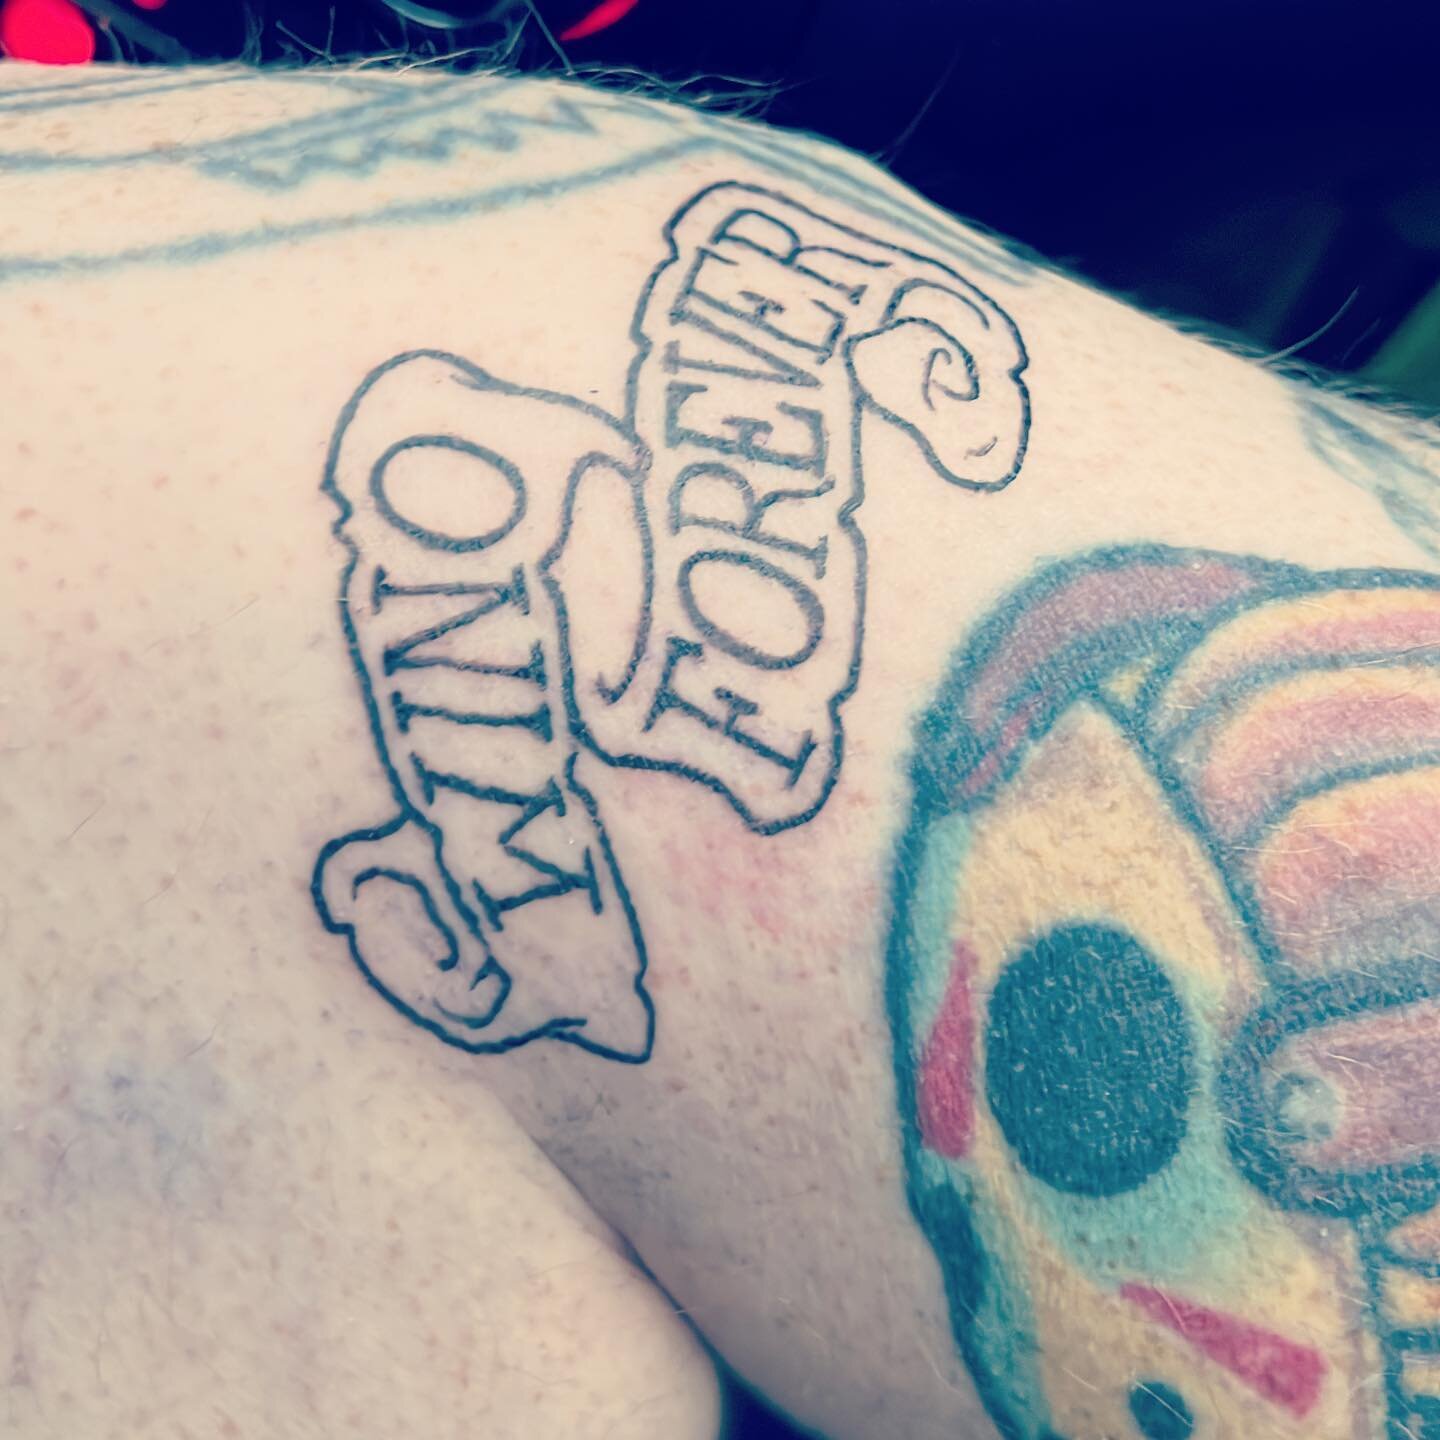 Did this on myself. #justiceforjohnnydepp #winonaforever #tattoos